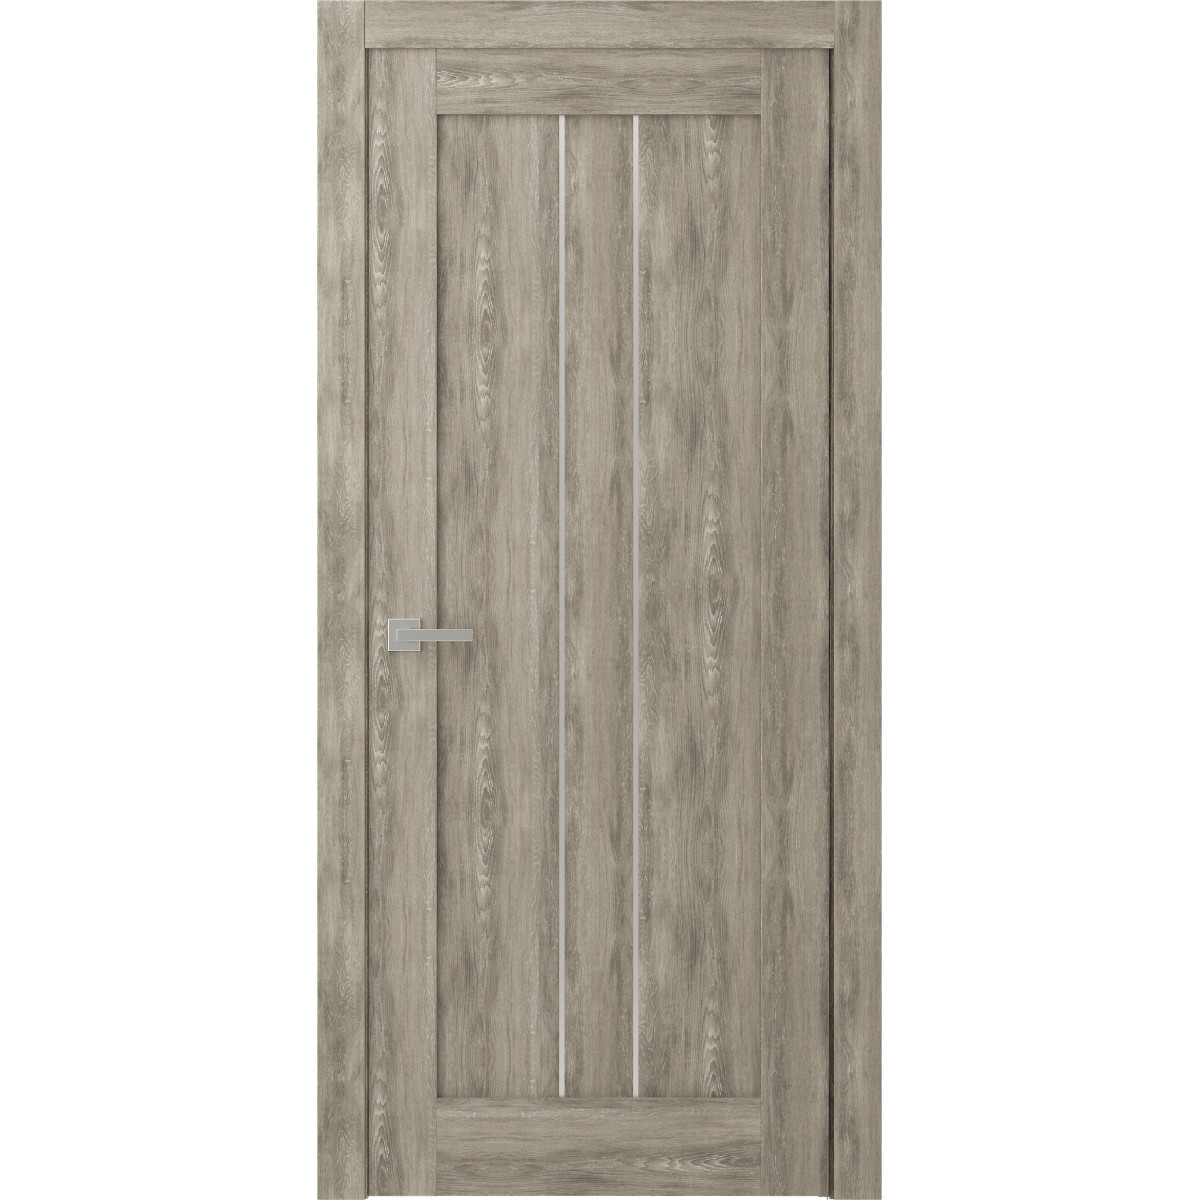 Дверь межкомнатная глухая Челси 80x200 см, экошпон, цвет дуб медовый